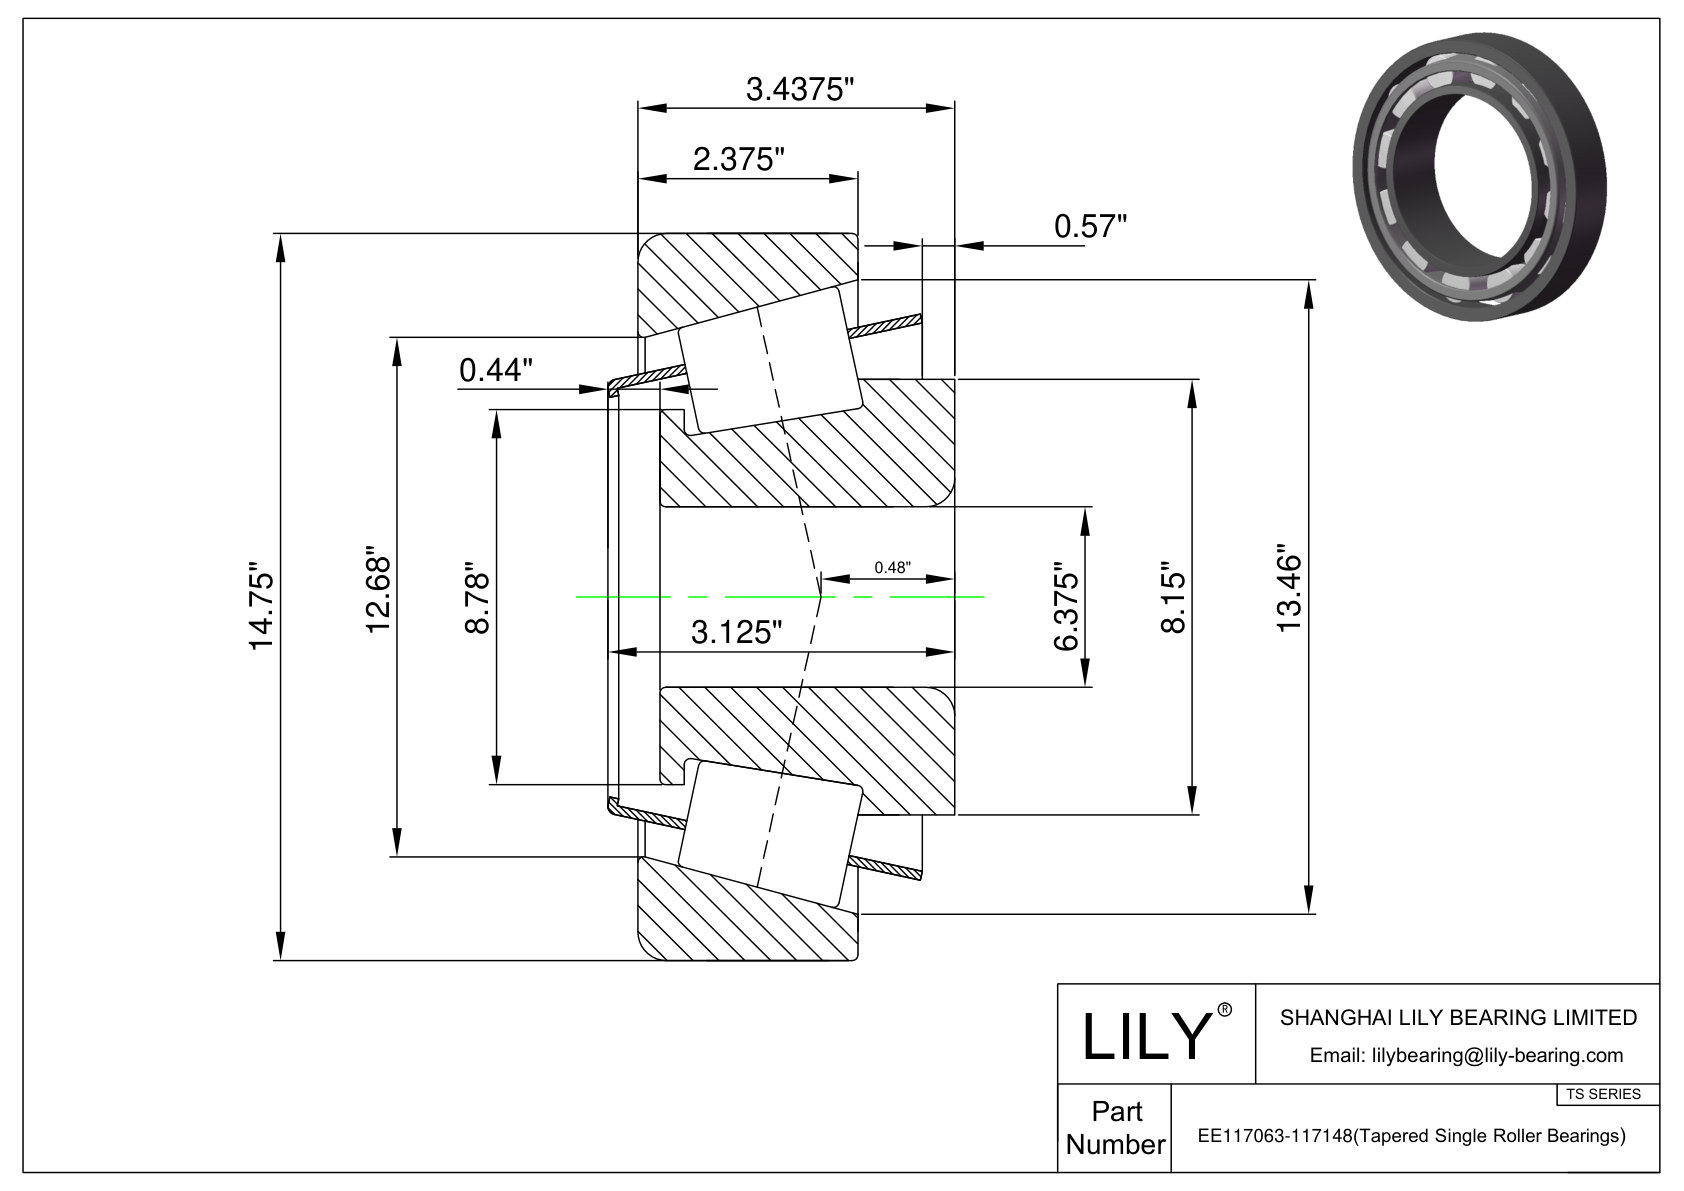 EE117063-117148 TS系列(圆锥单滚子轴承)(英制) CAD图形